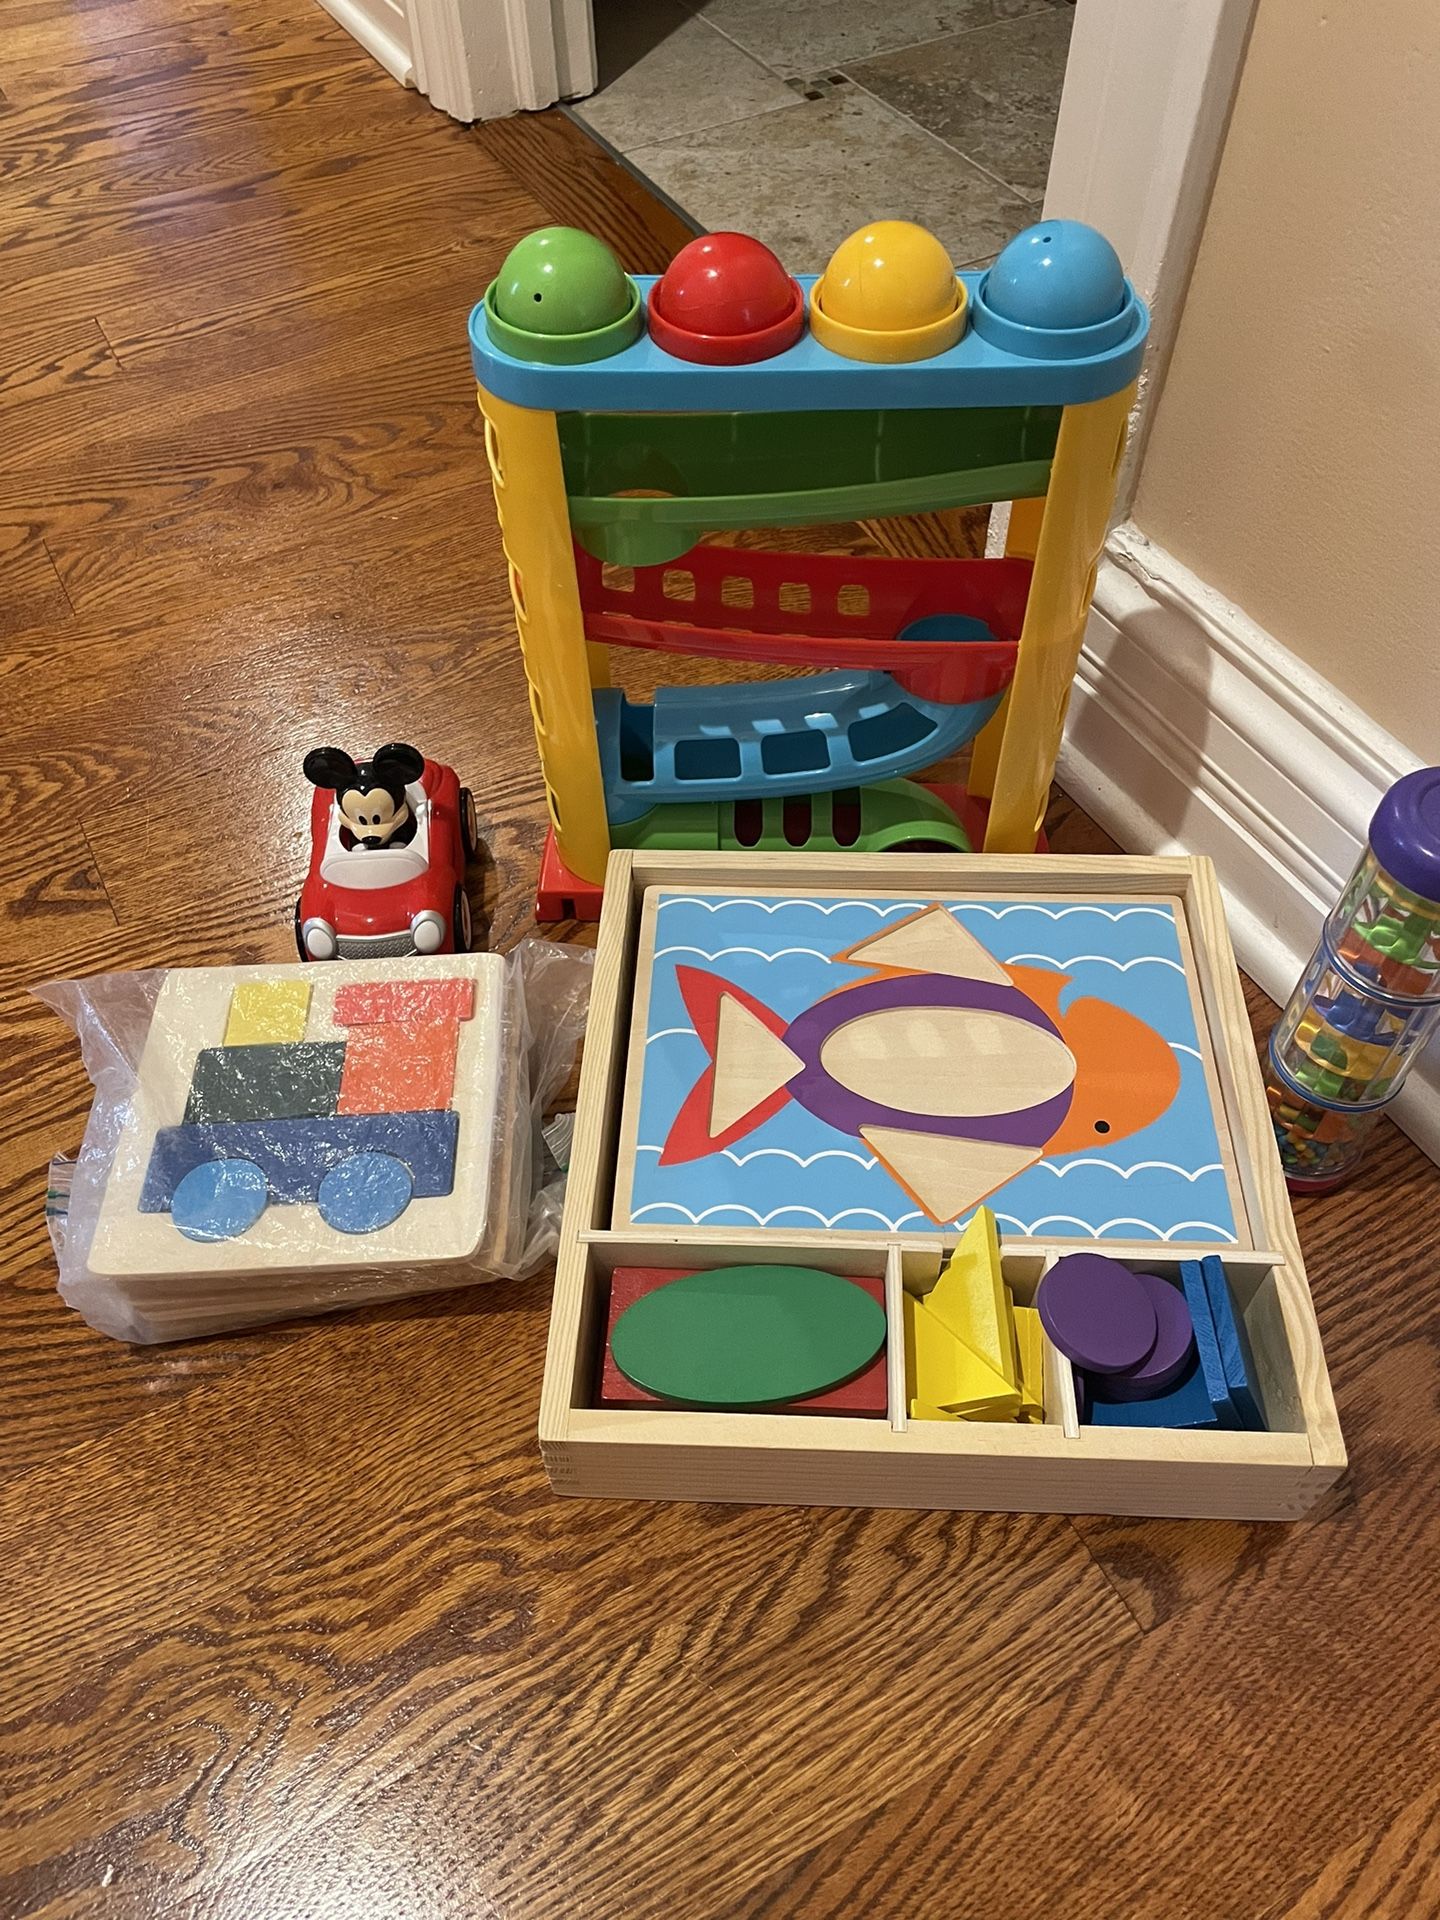 Baby/toddler developmental toy bundle Melissa and Doug block puzzles, push balls